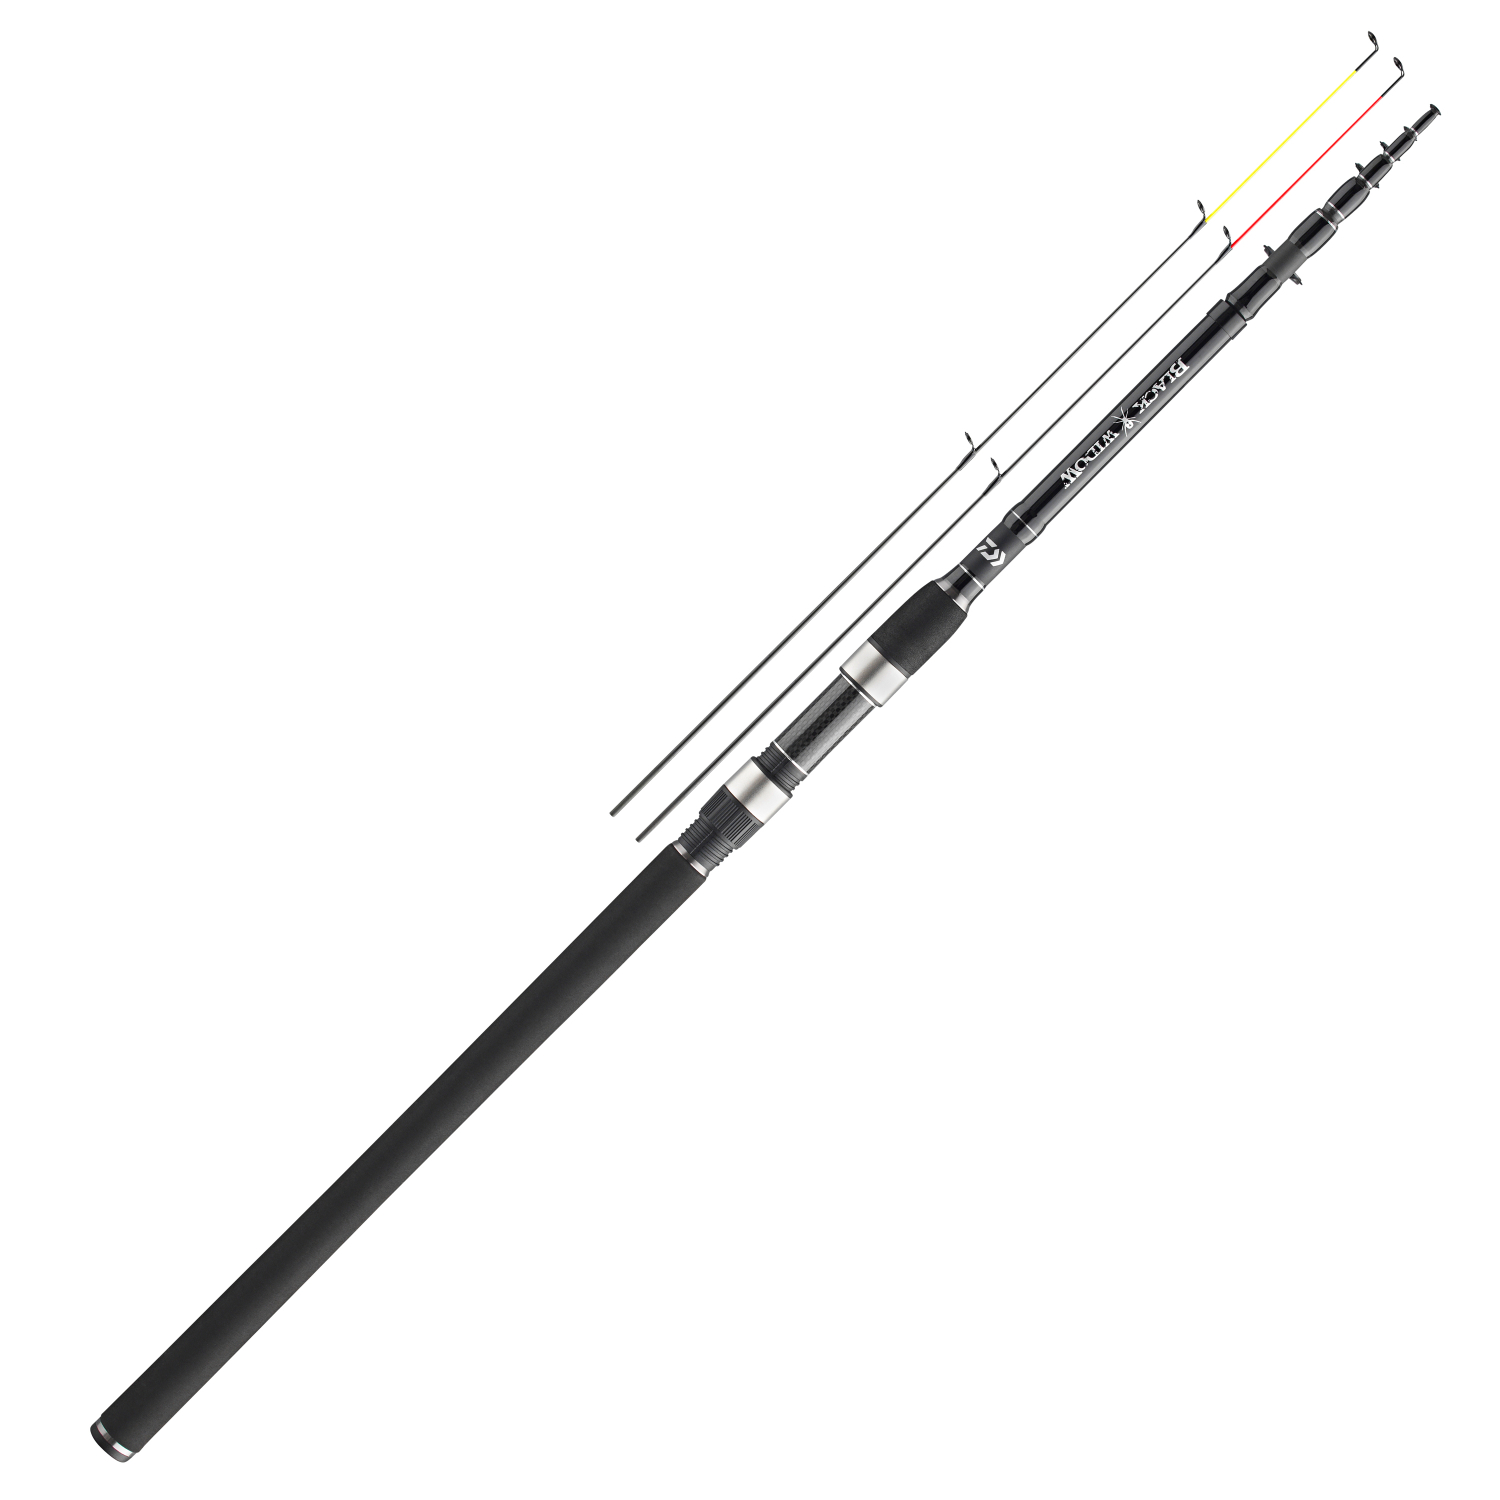 https://images.askari-sport.com/en/product/1/large/daiwa-fishing-rod-black-widow-tele-feeder.jpg